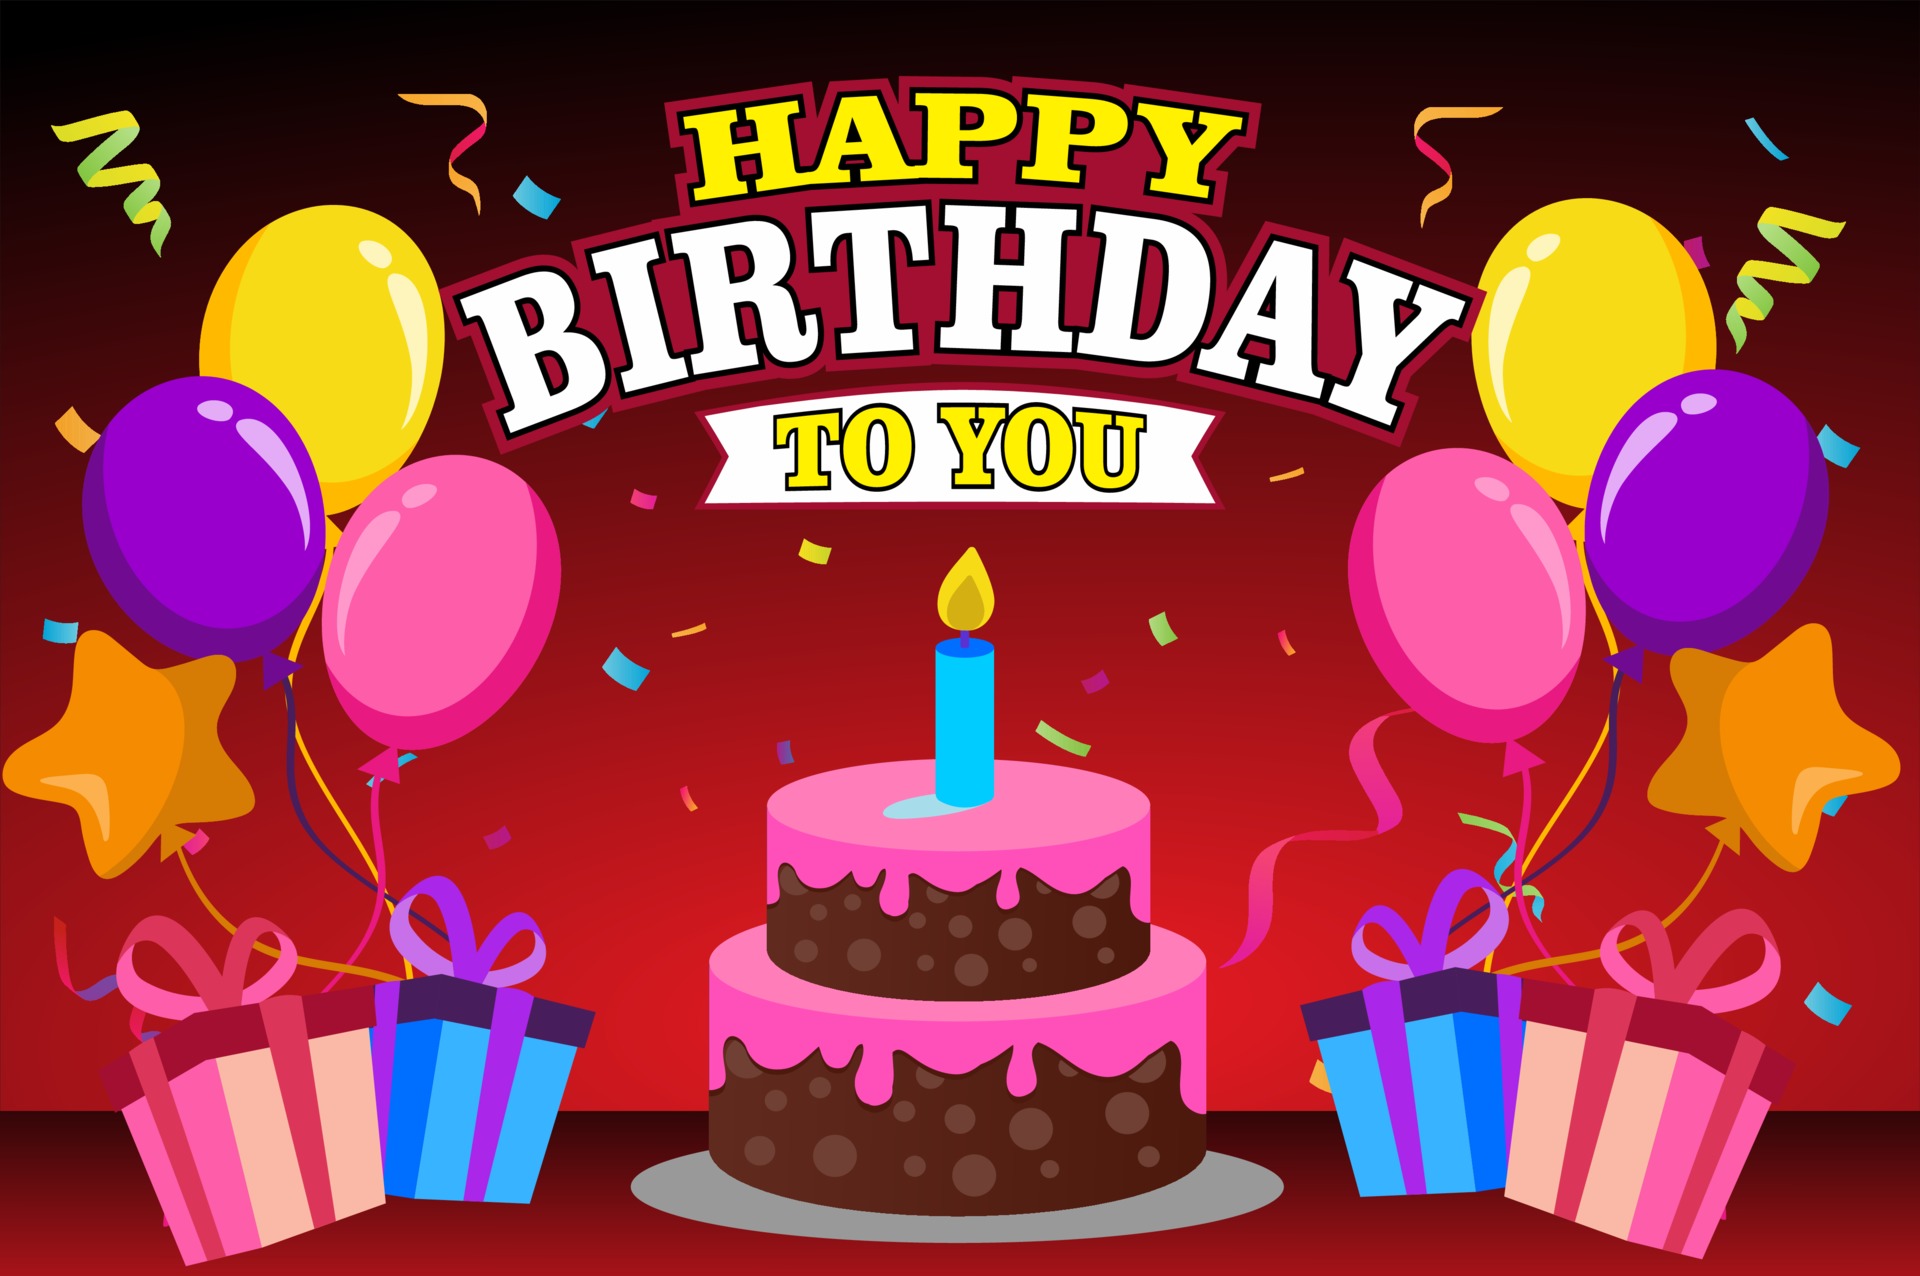 Palloncini Happy Birthday Torta (CMYK) 100pz